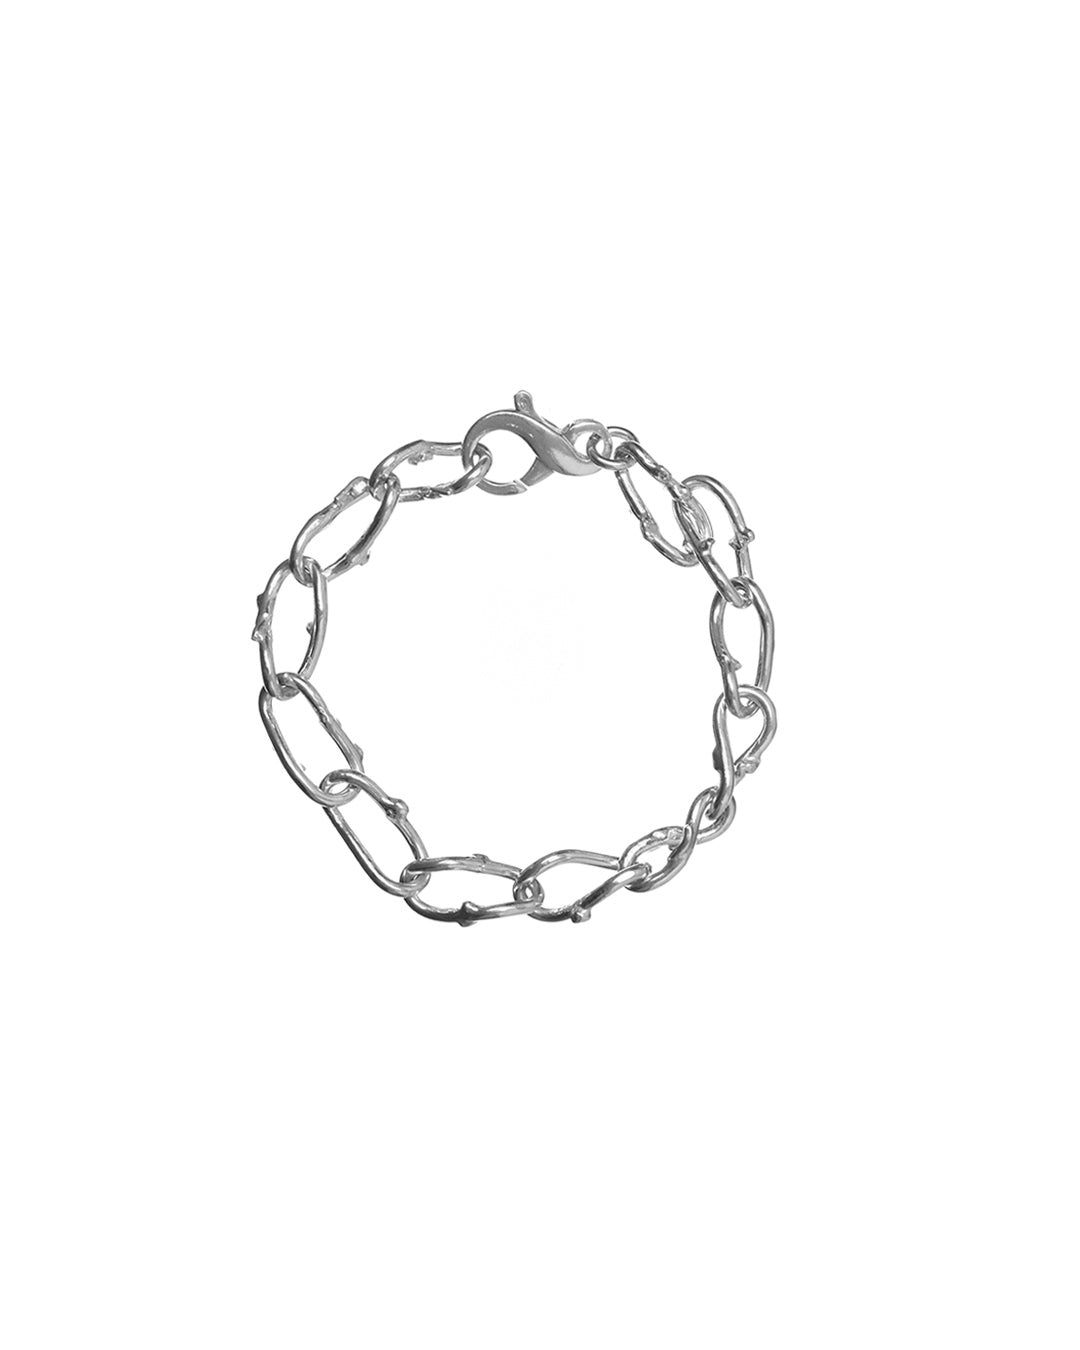 Nicometals - Curb Link Bracelet